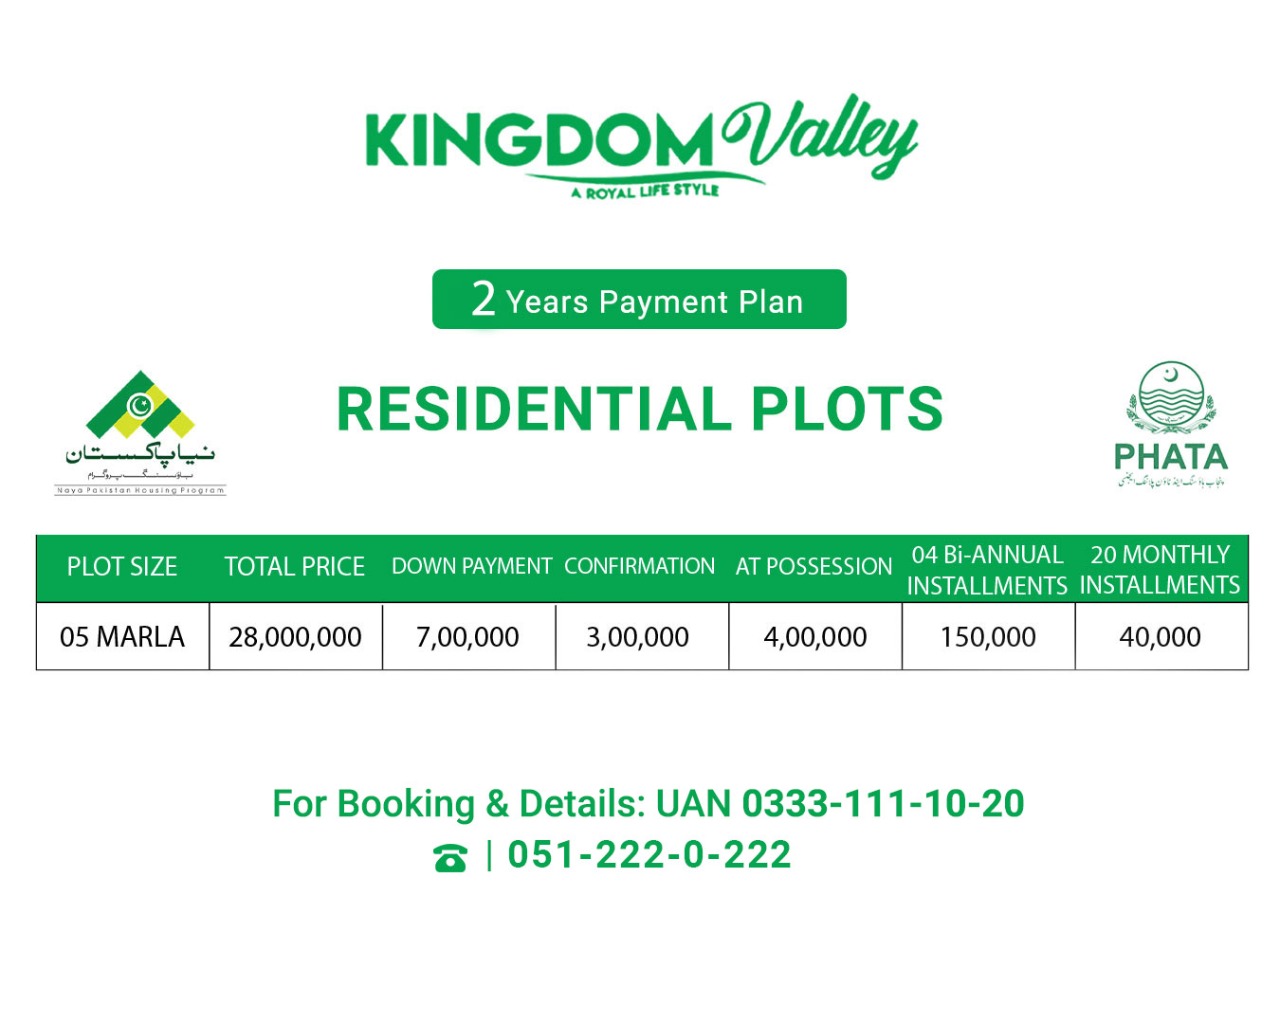 Kingdom Valley 5 Marla payment plan